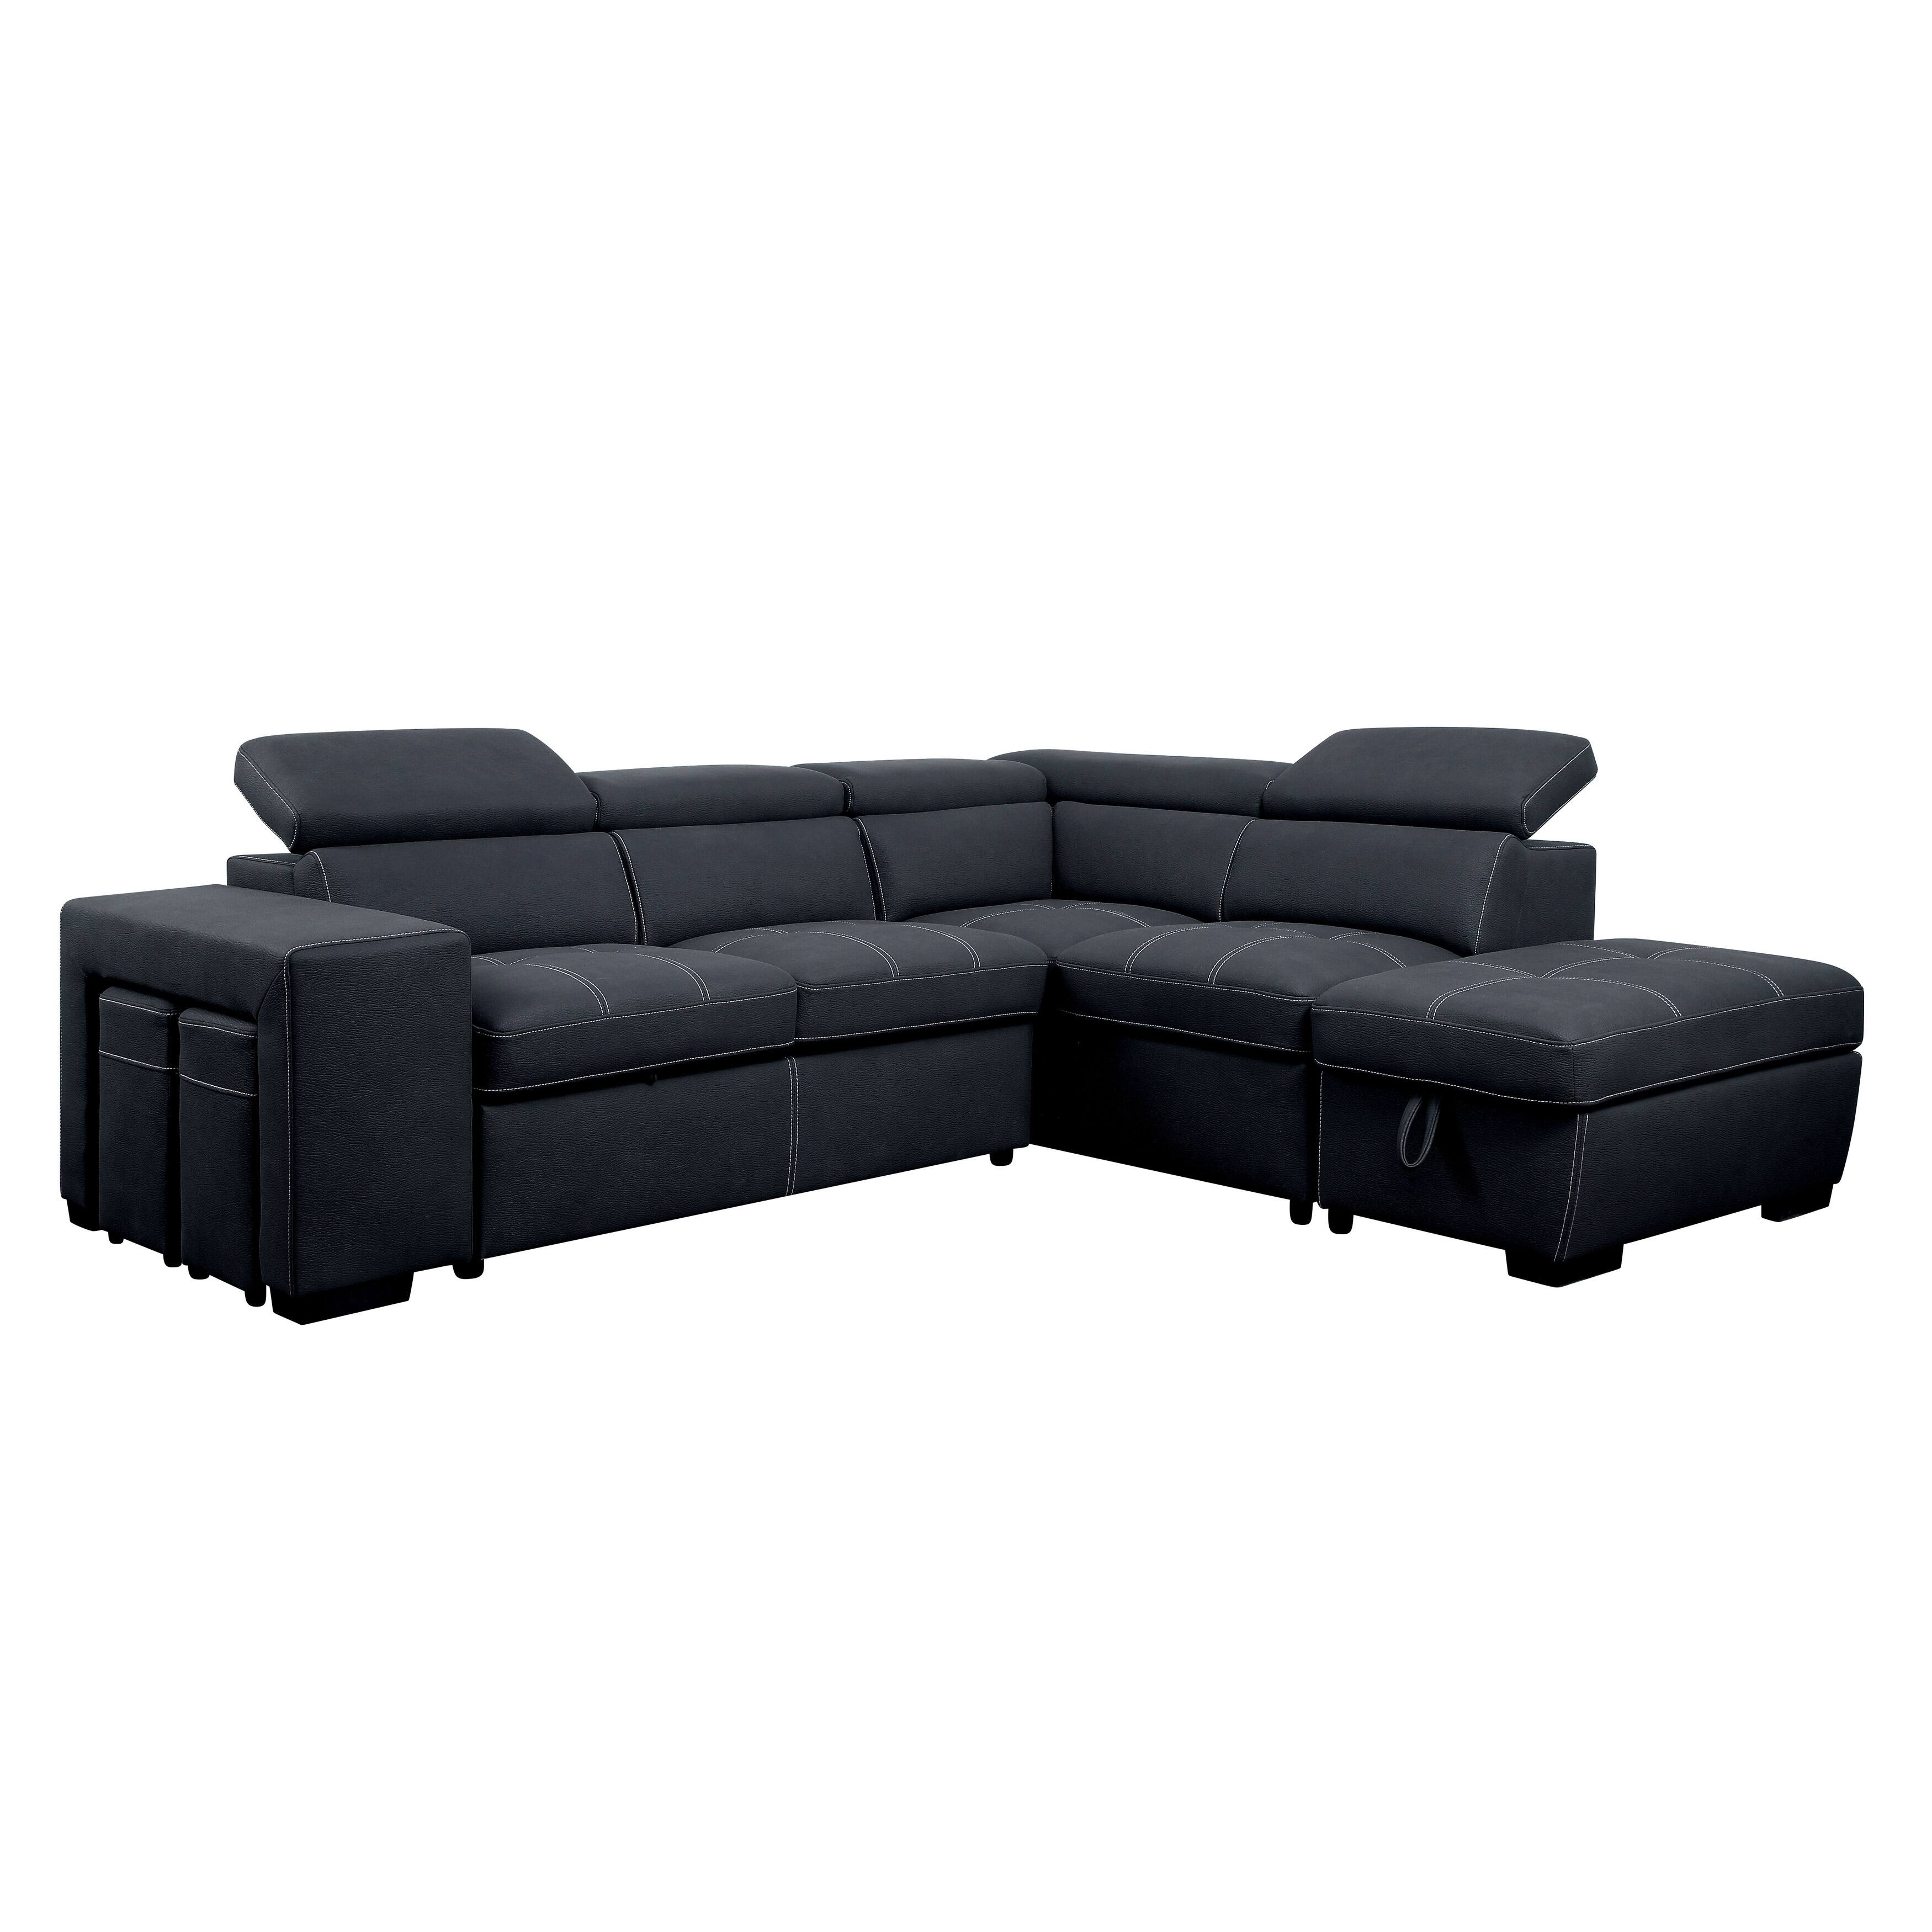 Brunelli Modern Grey Microfiber Sleeper Sofa Sectional by Strick & Bolton